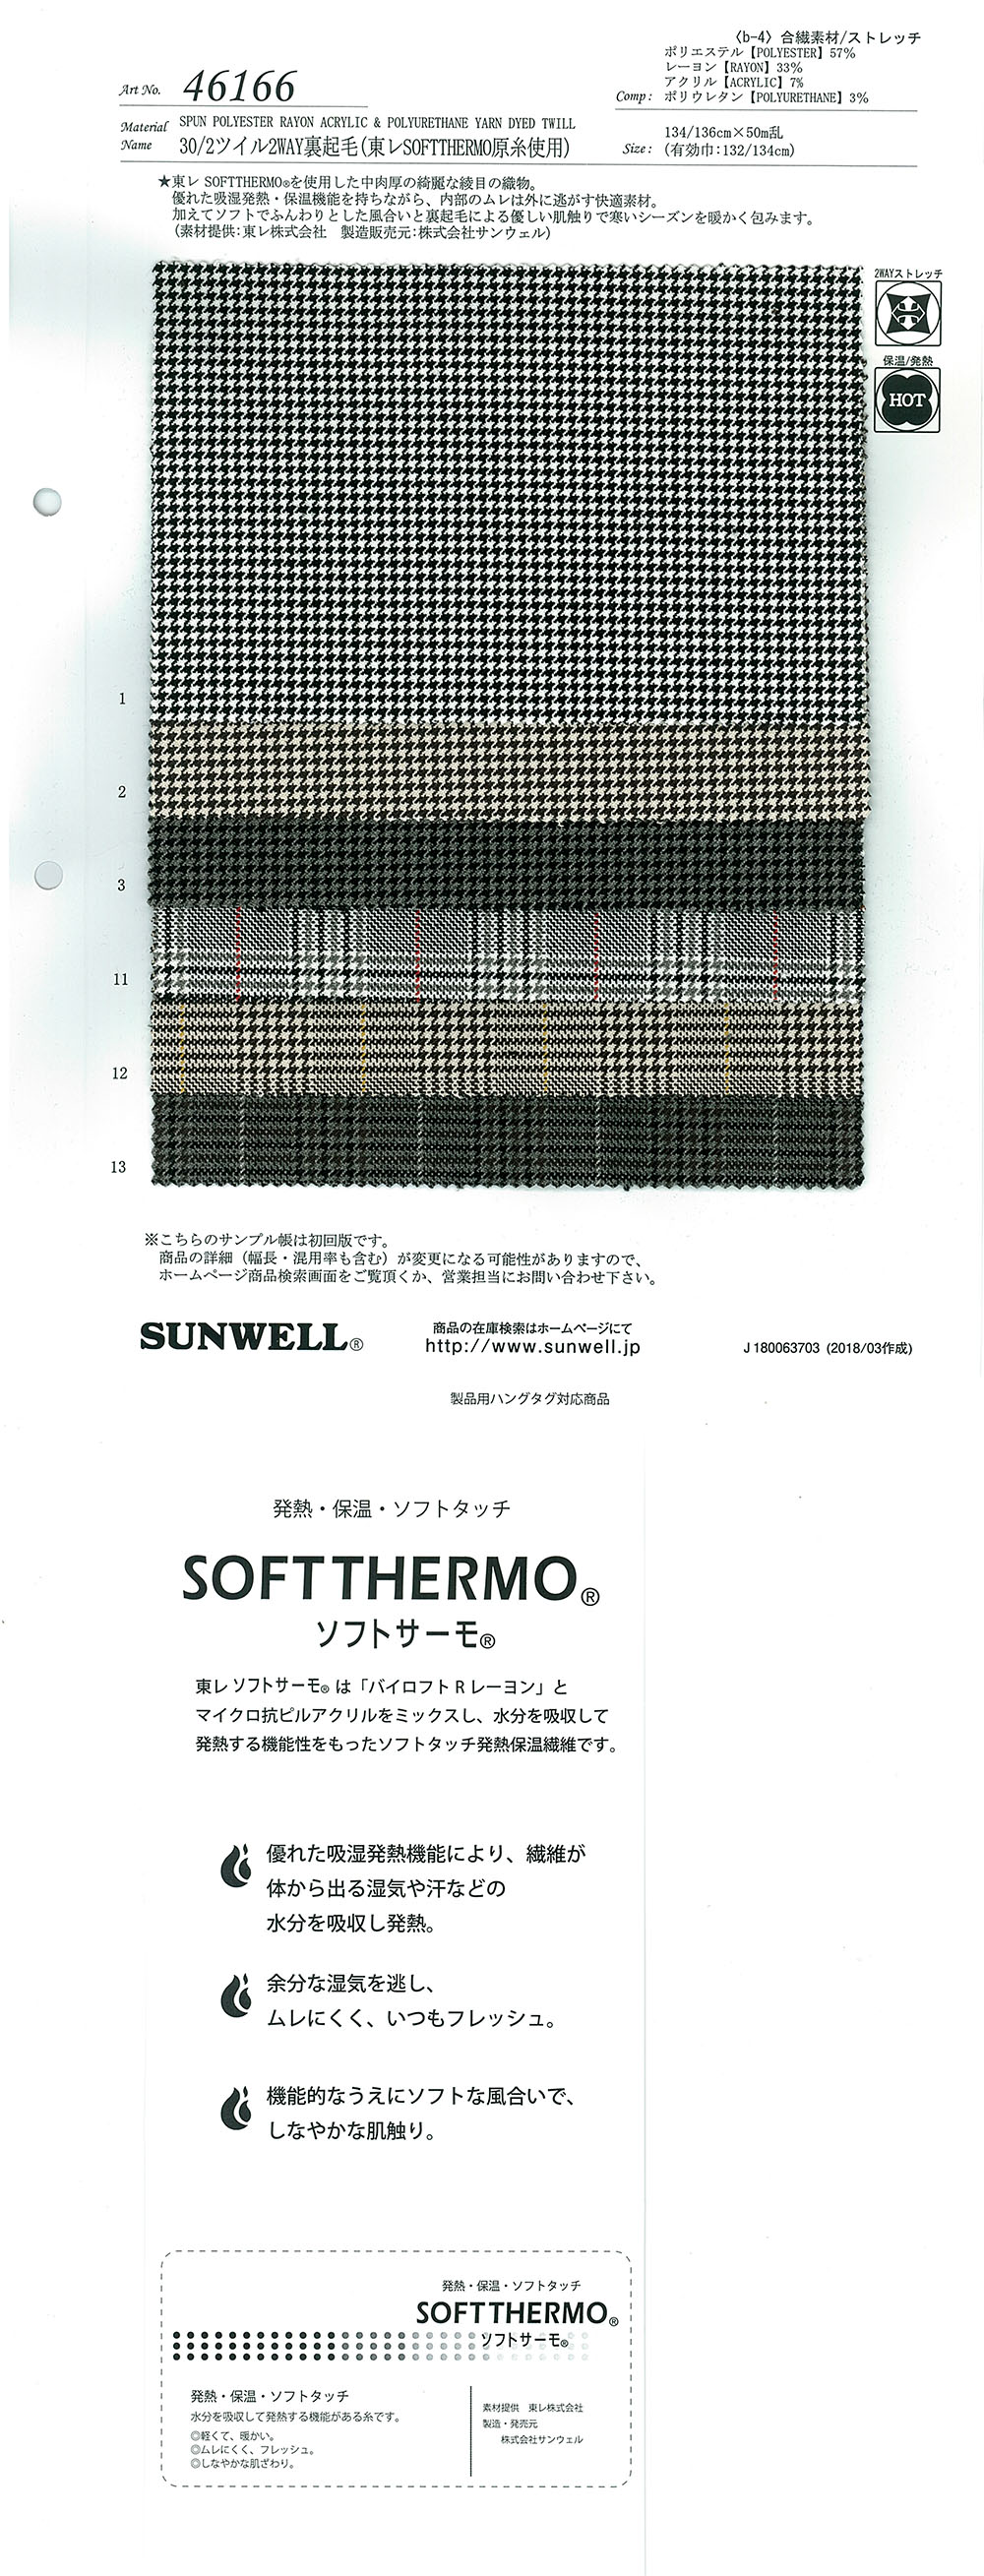 46166 30/2 Twill 2-way Fuzzy Lining (Using TORAY Softthermo Thread)[Textile / Fabric] SUNWELL